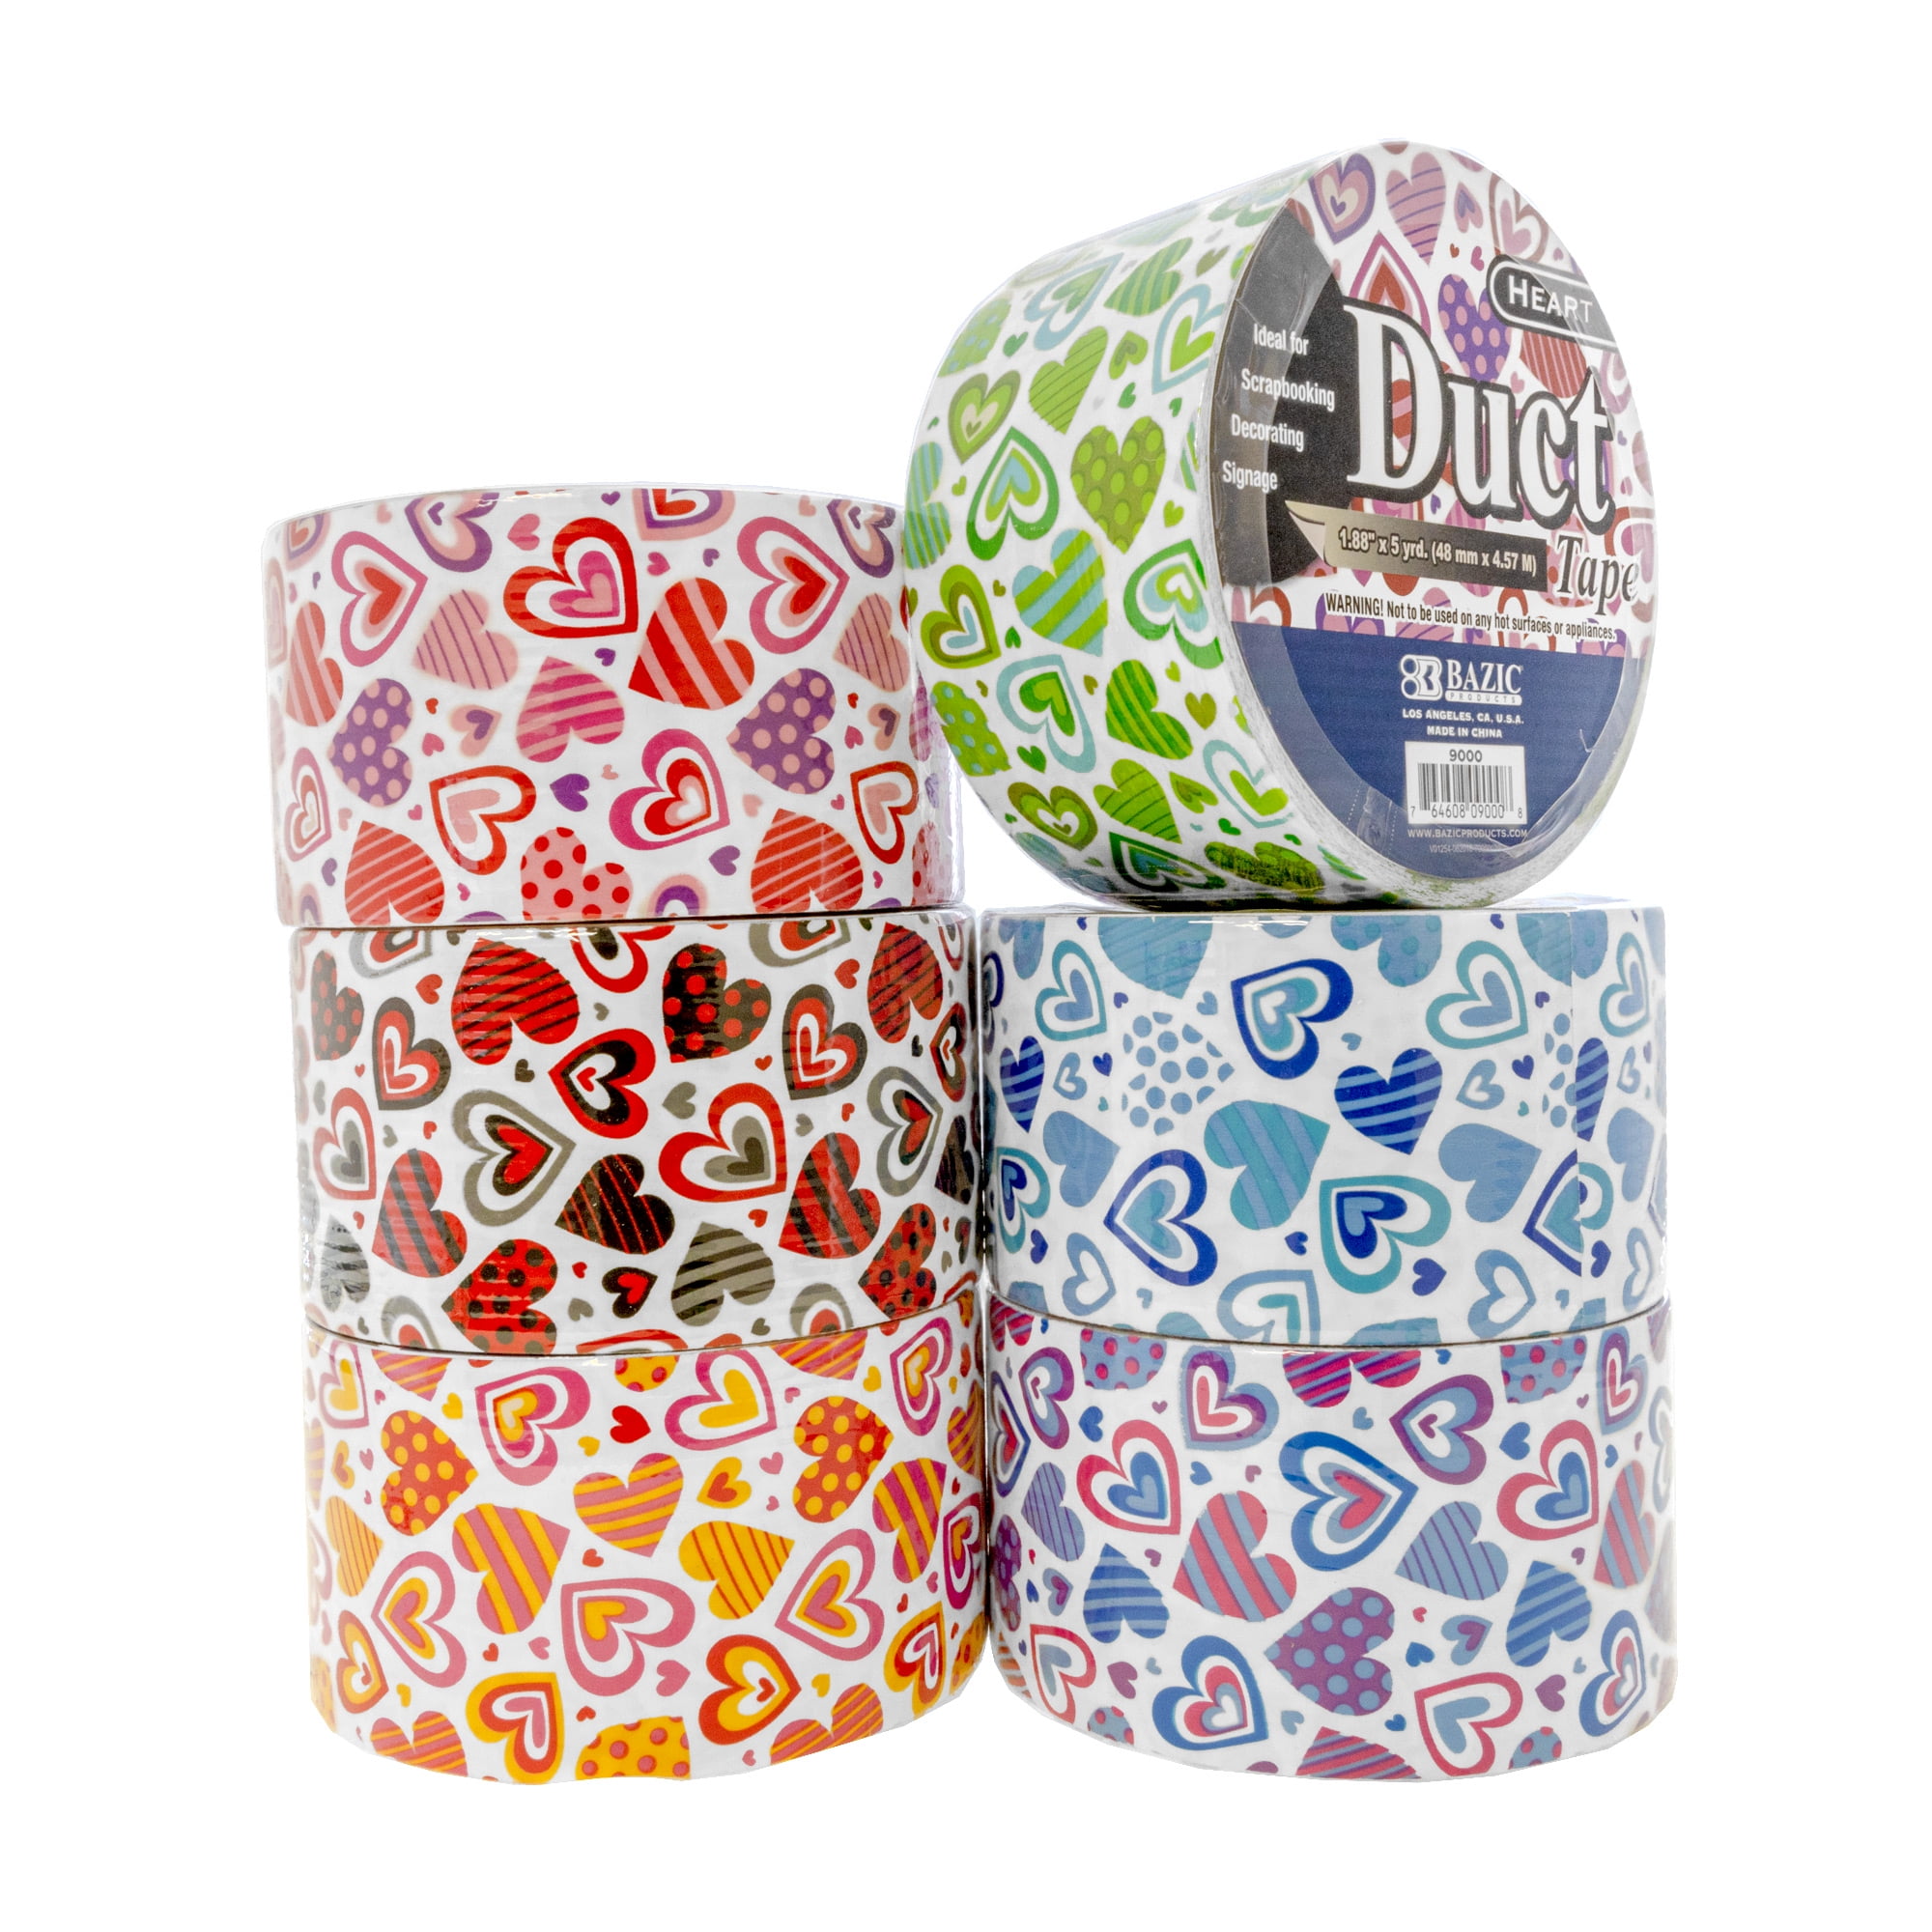 BAZIC Printed Duct Tape Polka Dot Pattern 1.88 X 5 Yards, 6-Pack 